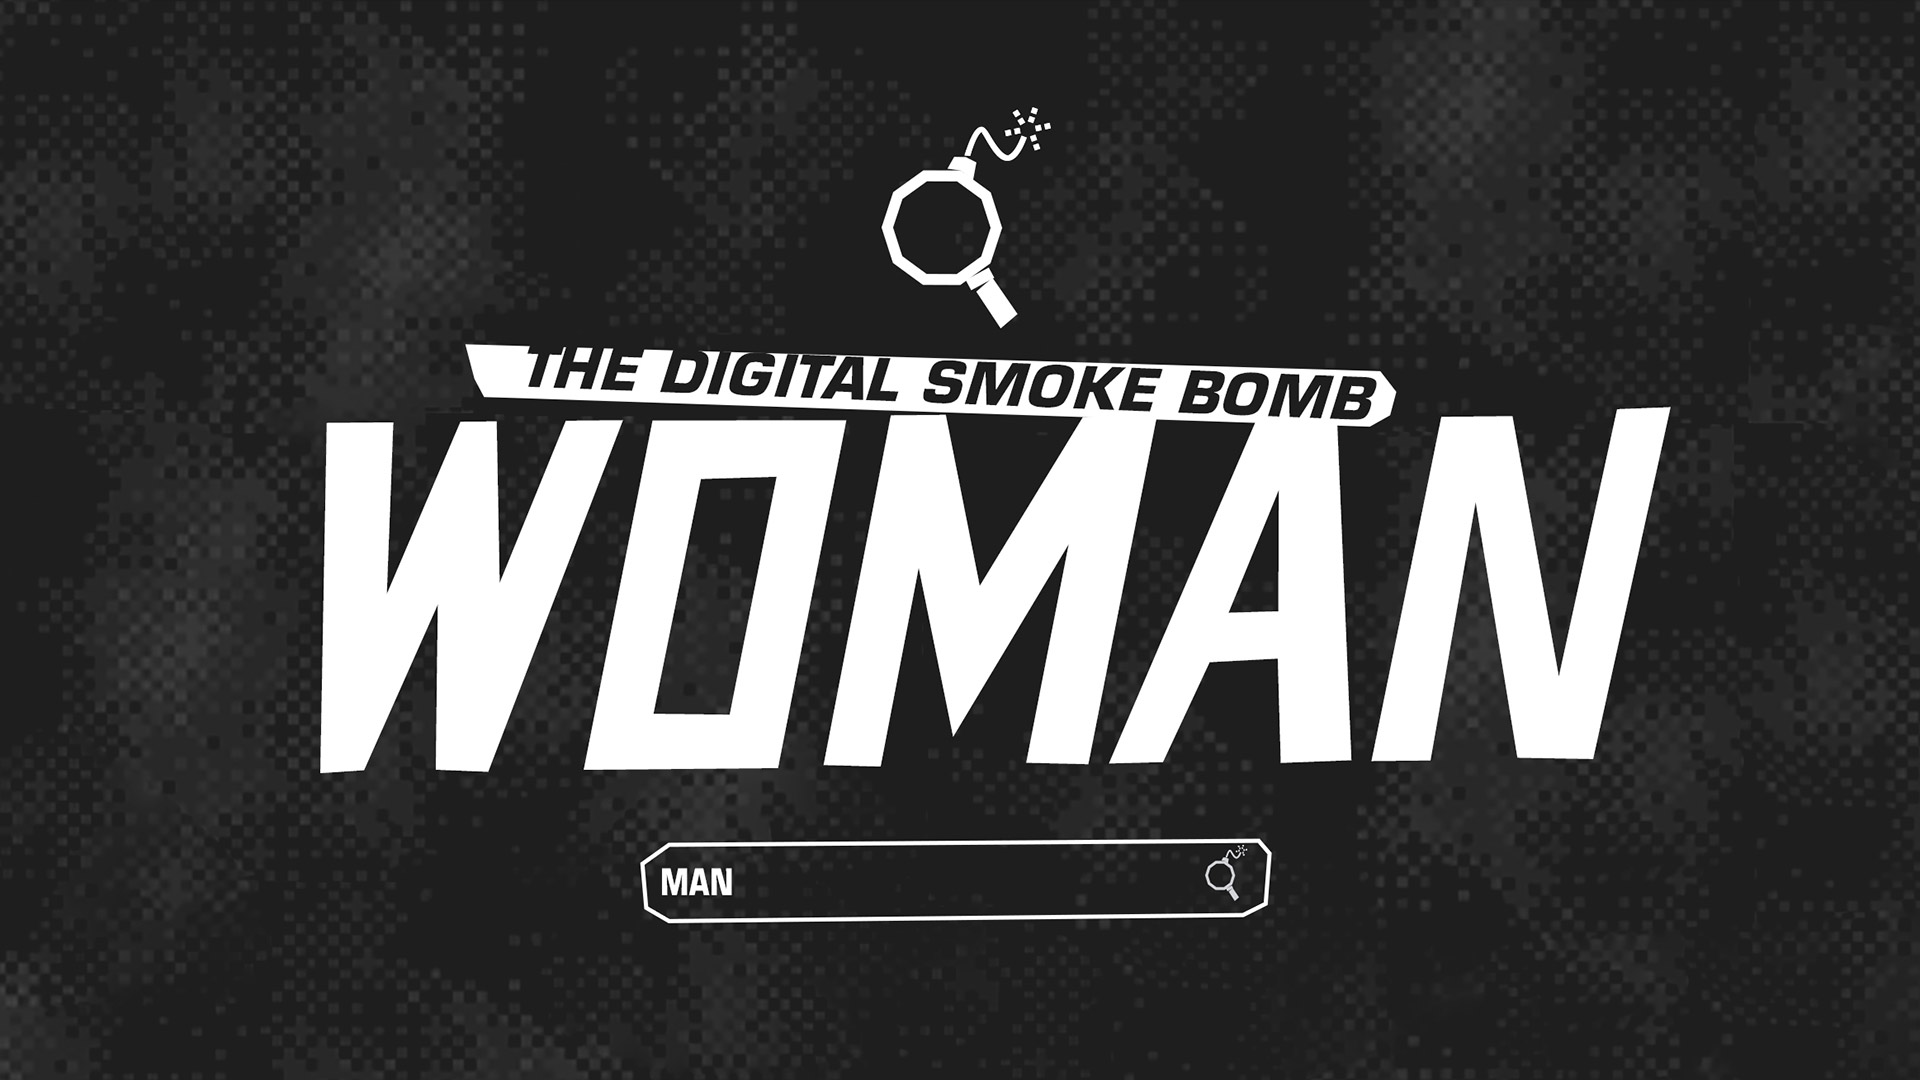 Antonymous - the Digital Smoke Bomb